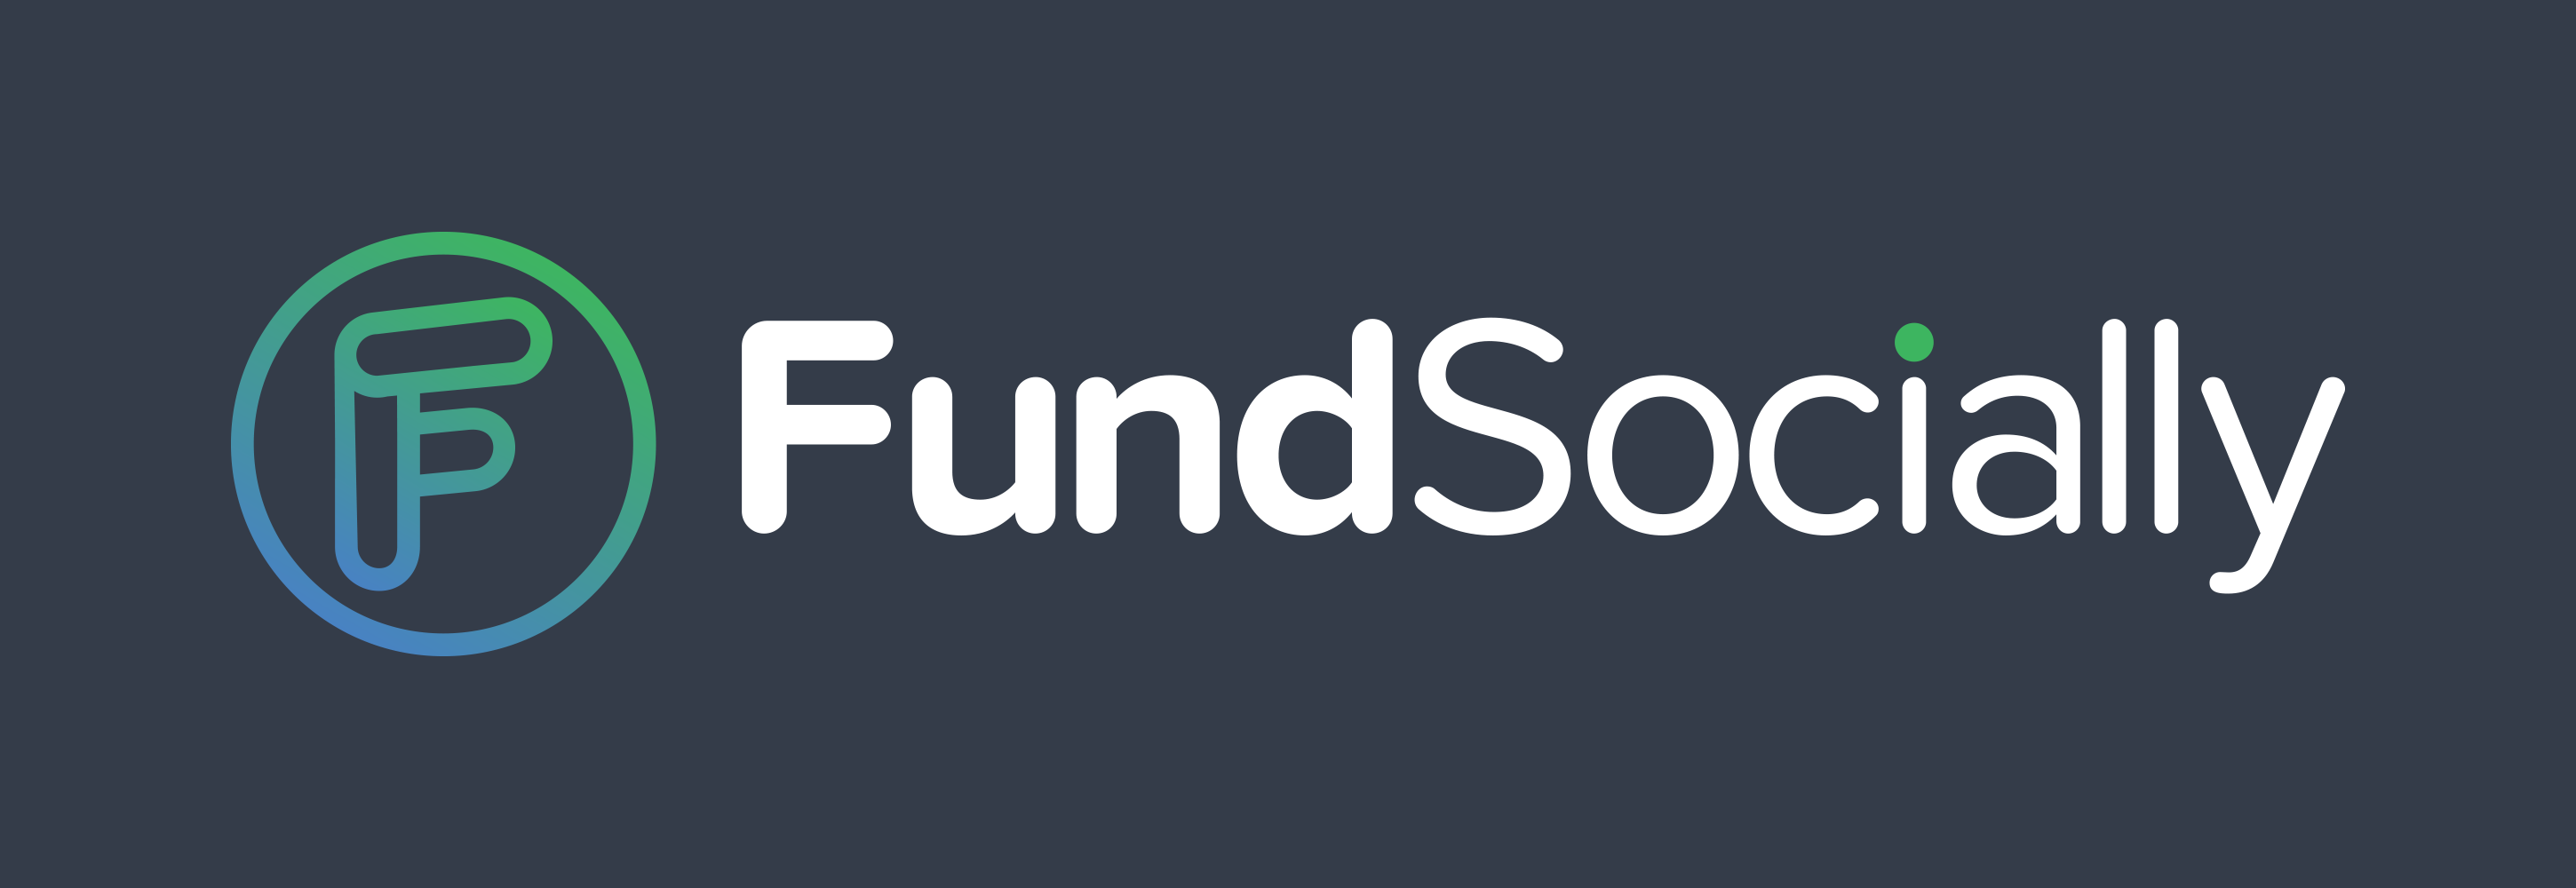 FundSocially logo on dark background